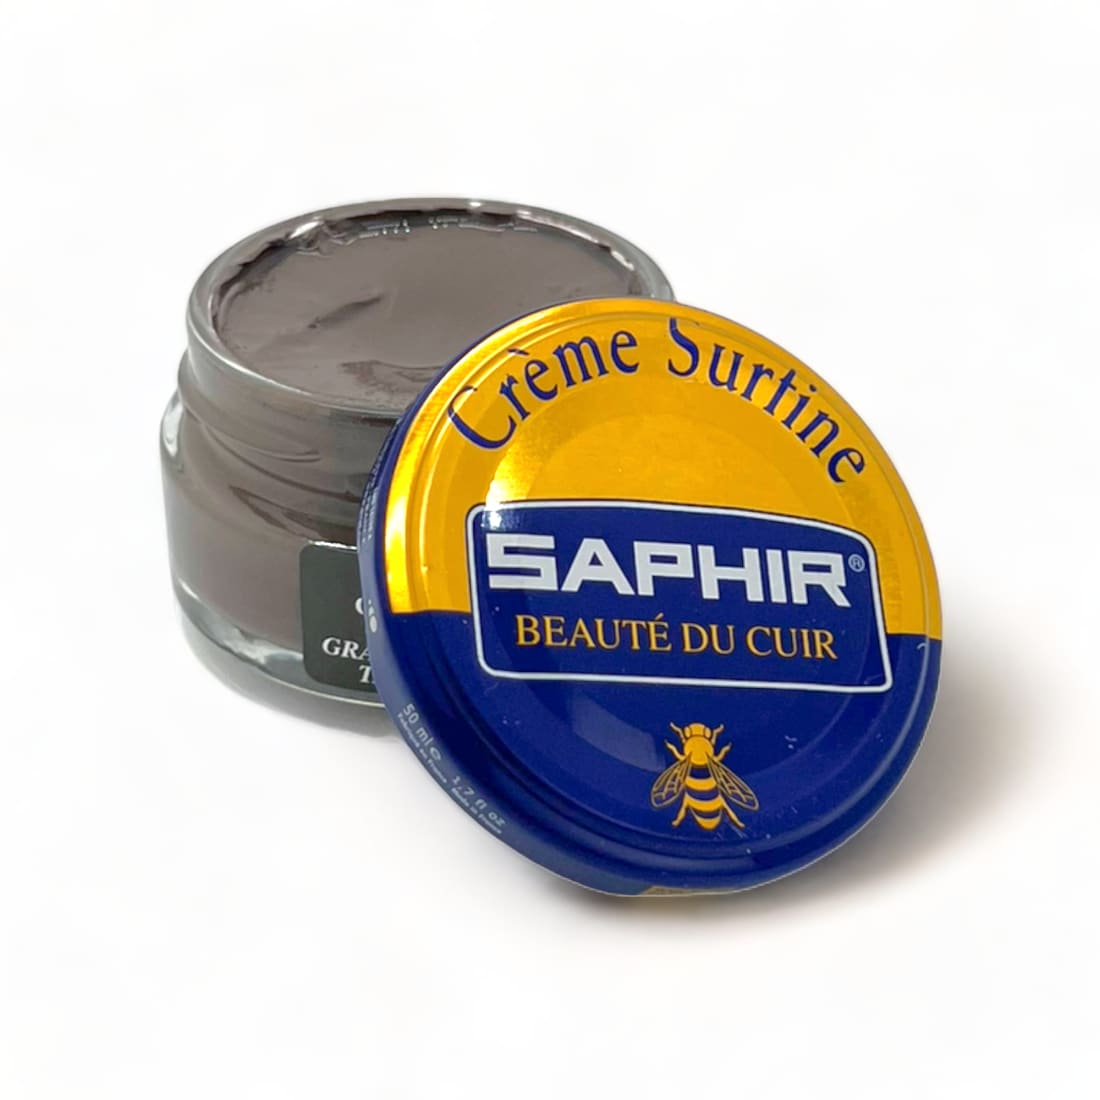 Cirage Crème Surfine Gris Taupe - Saphir - 50 ml -